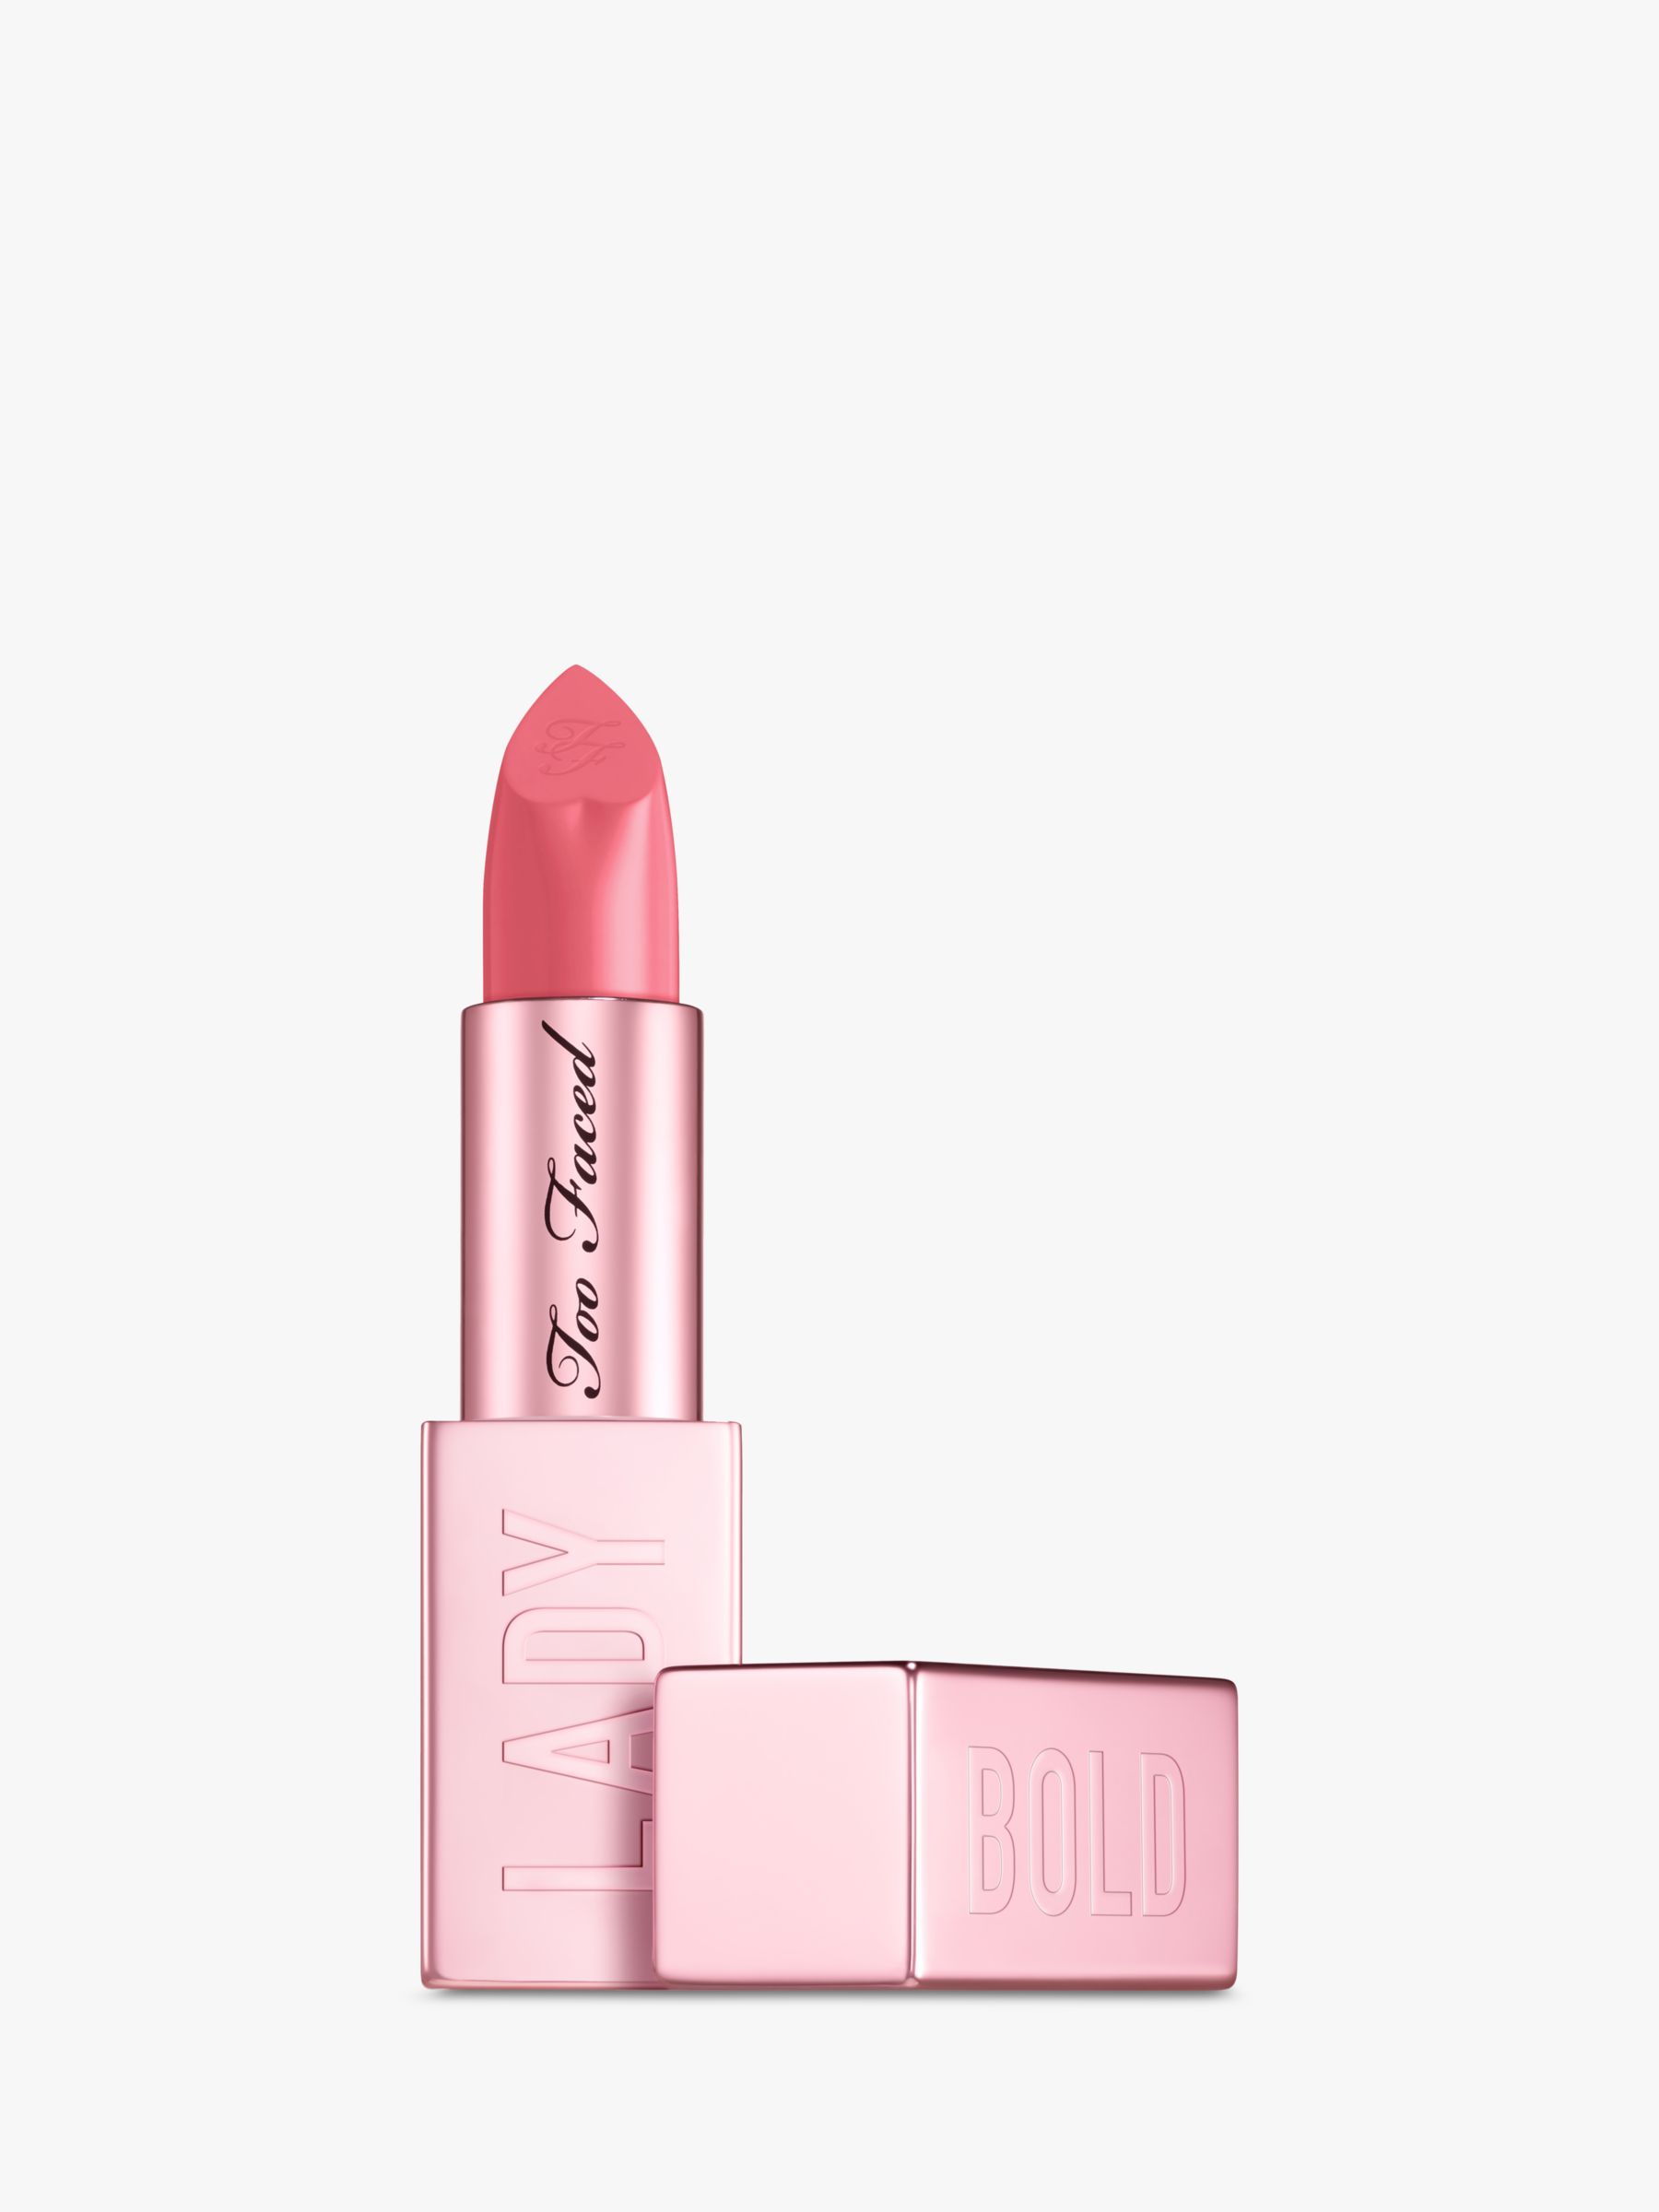 Too Faced Lady Bold Em-Power Pigment Cream Lipstick, Dear Diary 1